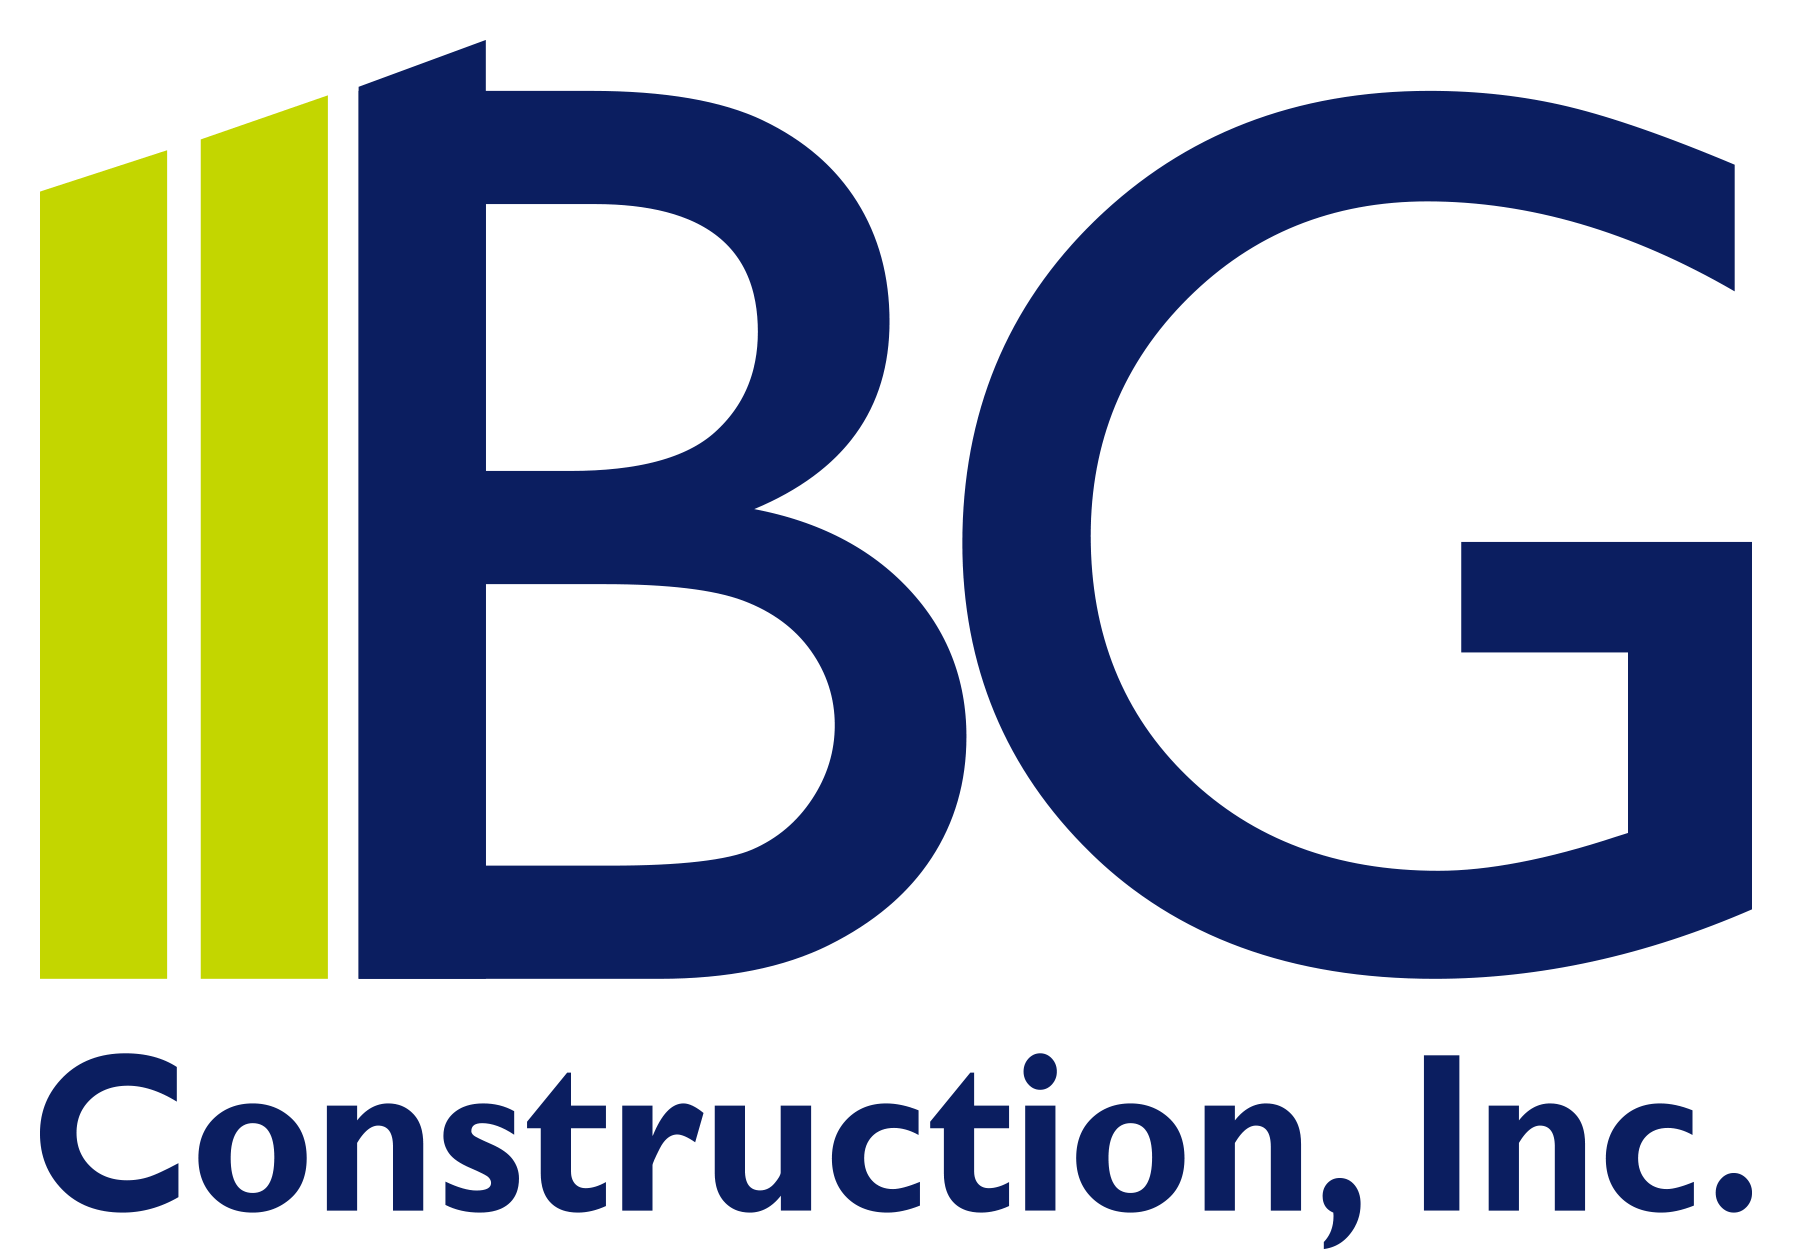 https://growthzonecmsprodeastus.azureedge.net/sites/995/2022/07/BG-Construction_Logo.png